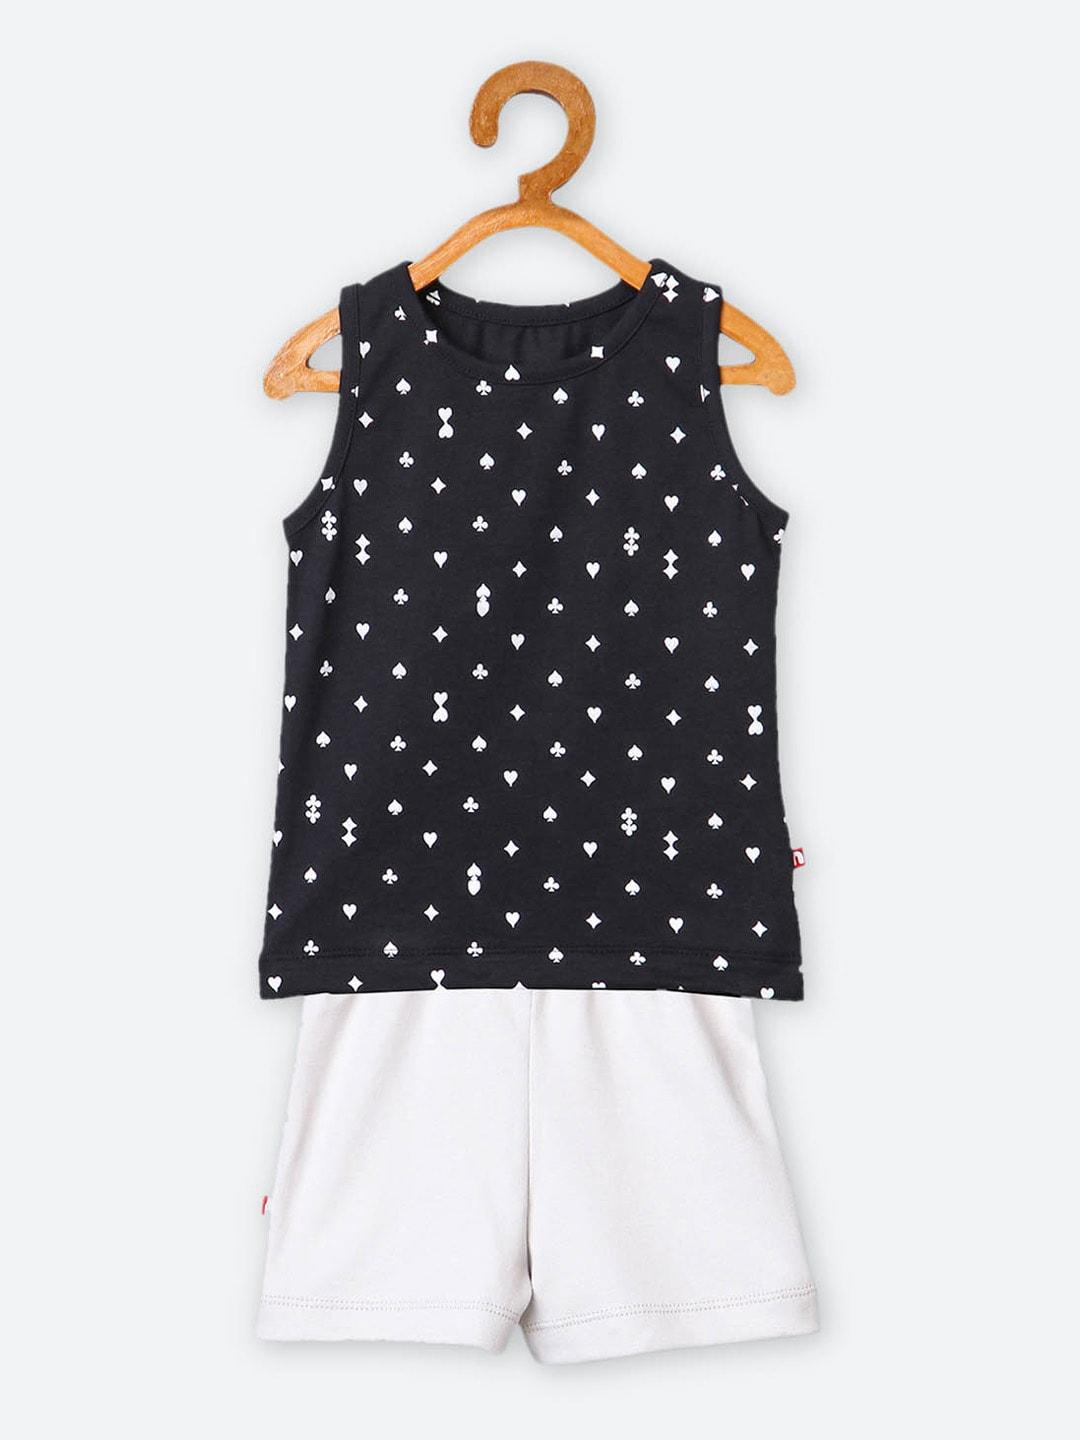 nino bambino infant black & white printed organic cotton t-shirt with shorts